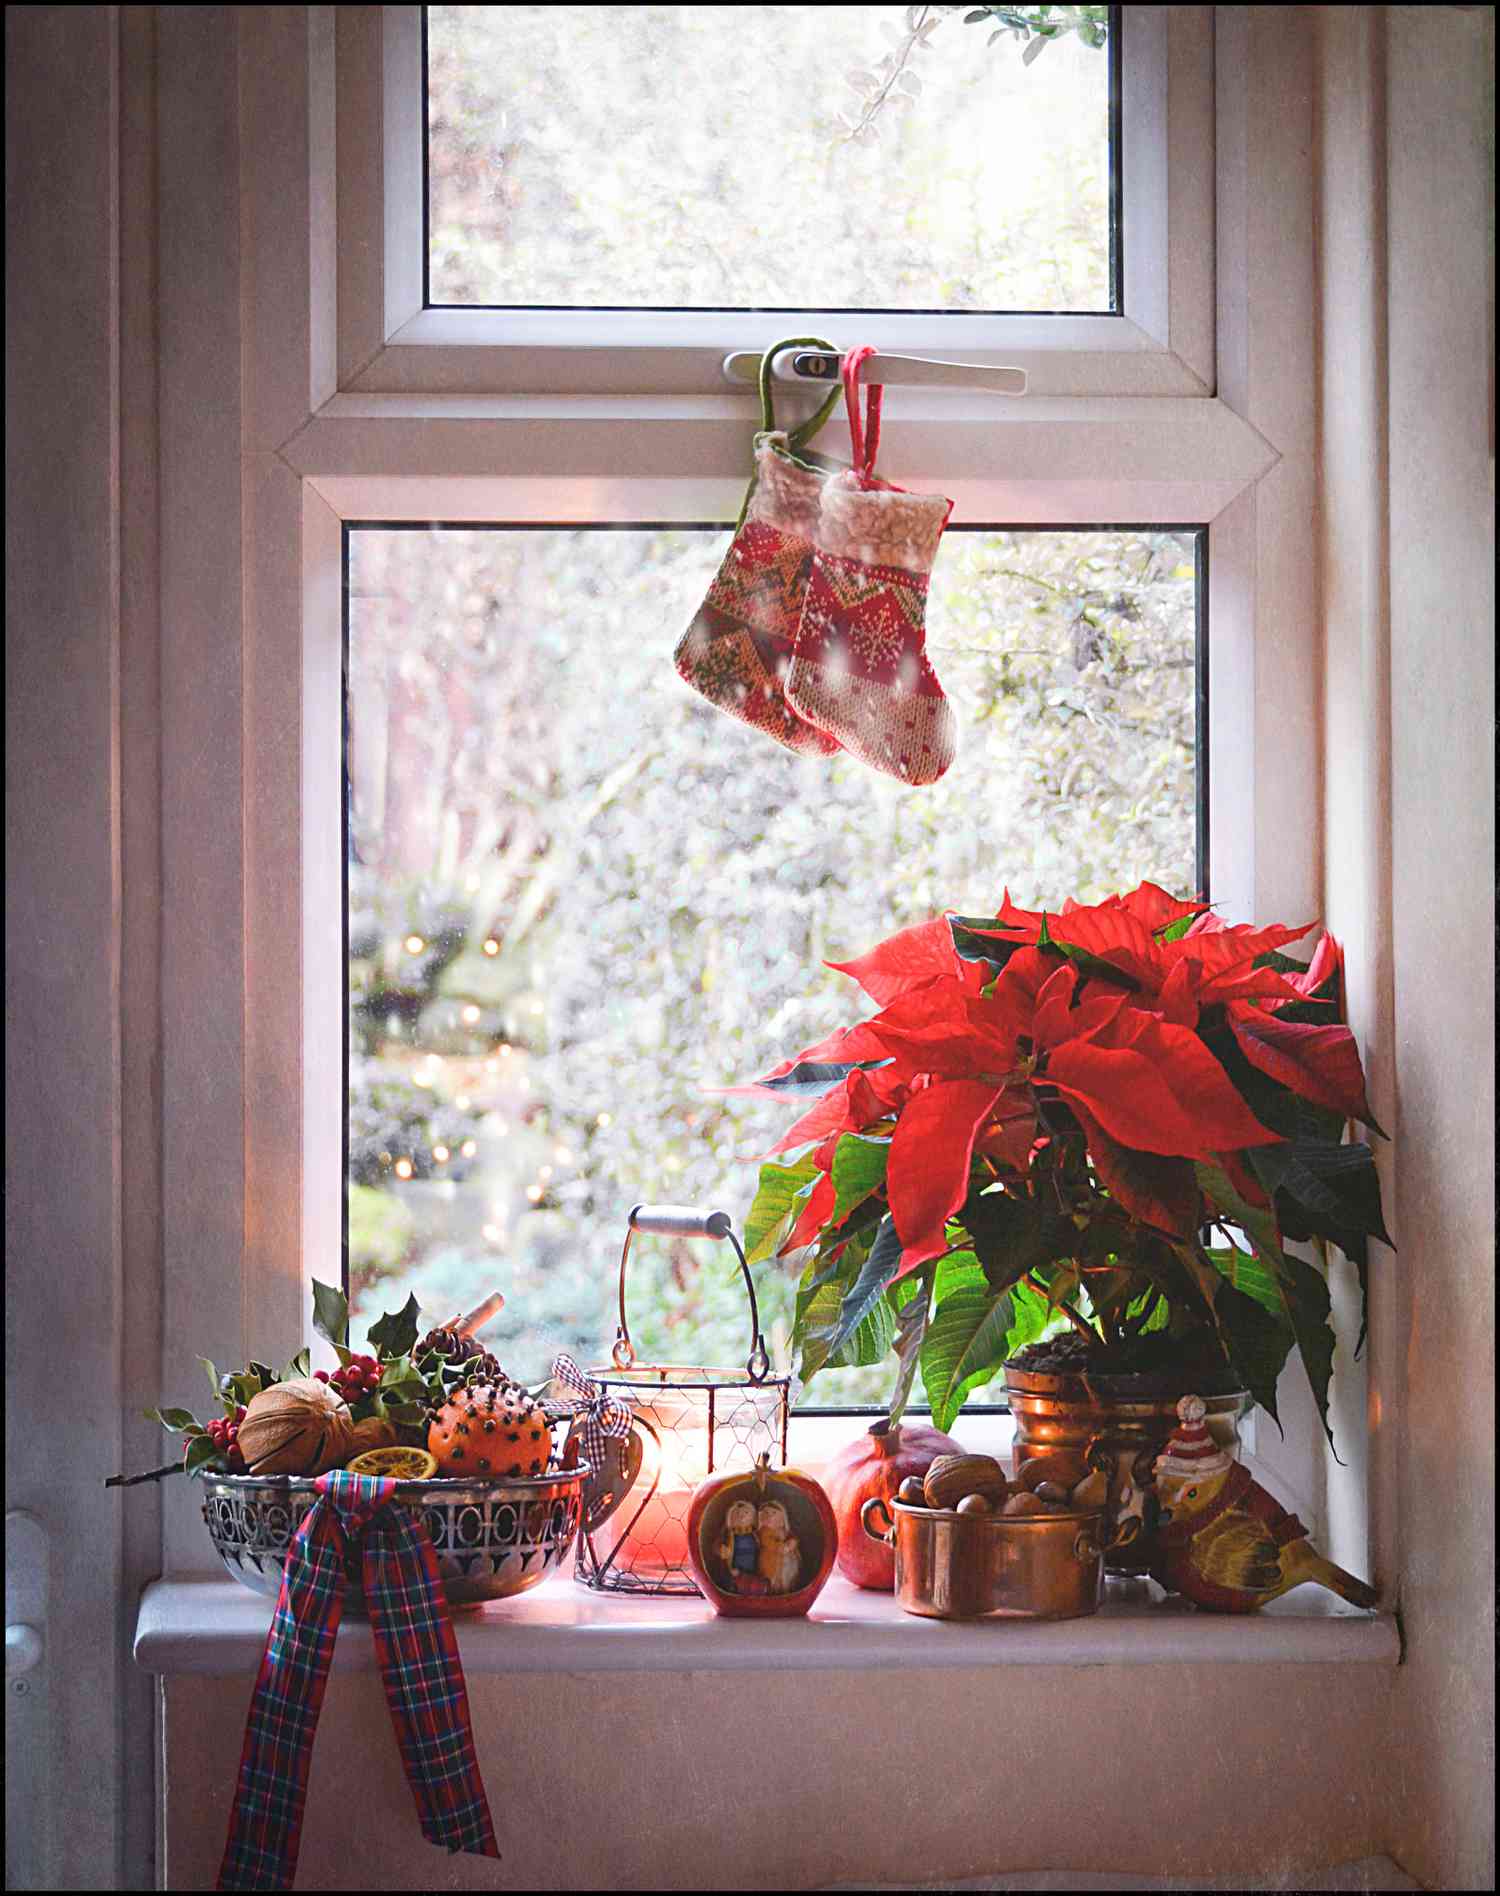 alféizar con flores de pascua y decoración navideña